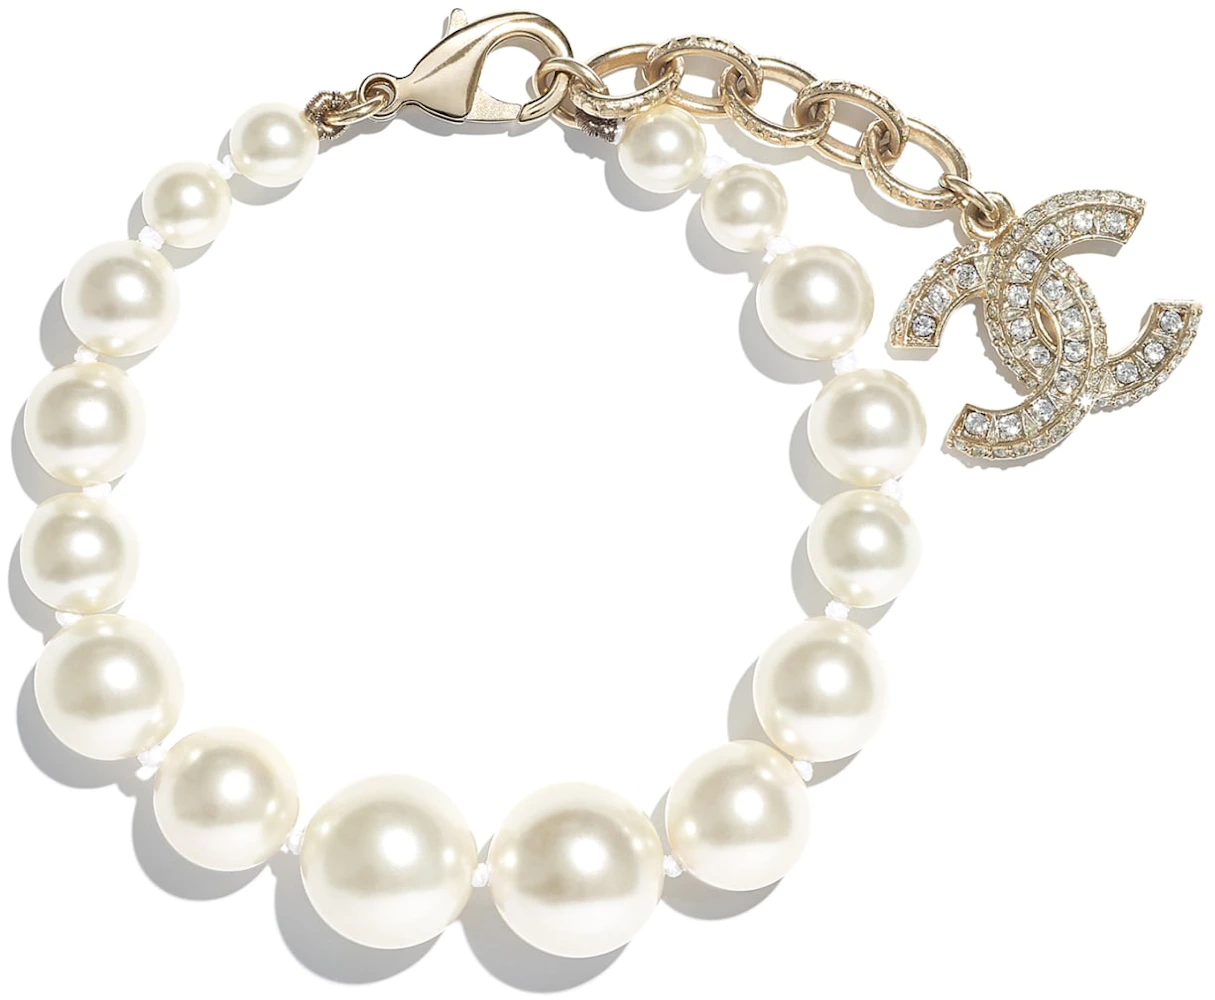 Chanel Interlocking Bracelet Gold/White/Crystal in Metal/Glass Pearls/Strass  - US